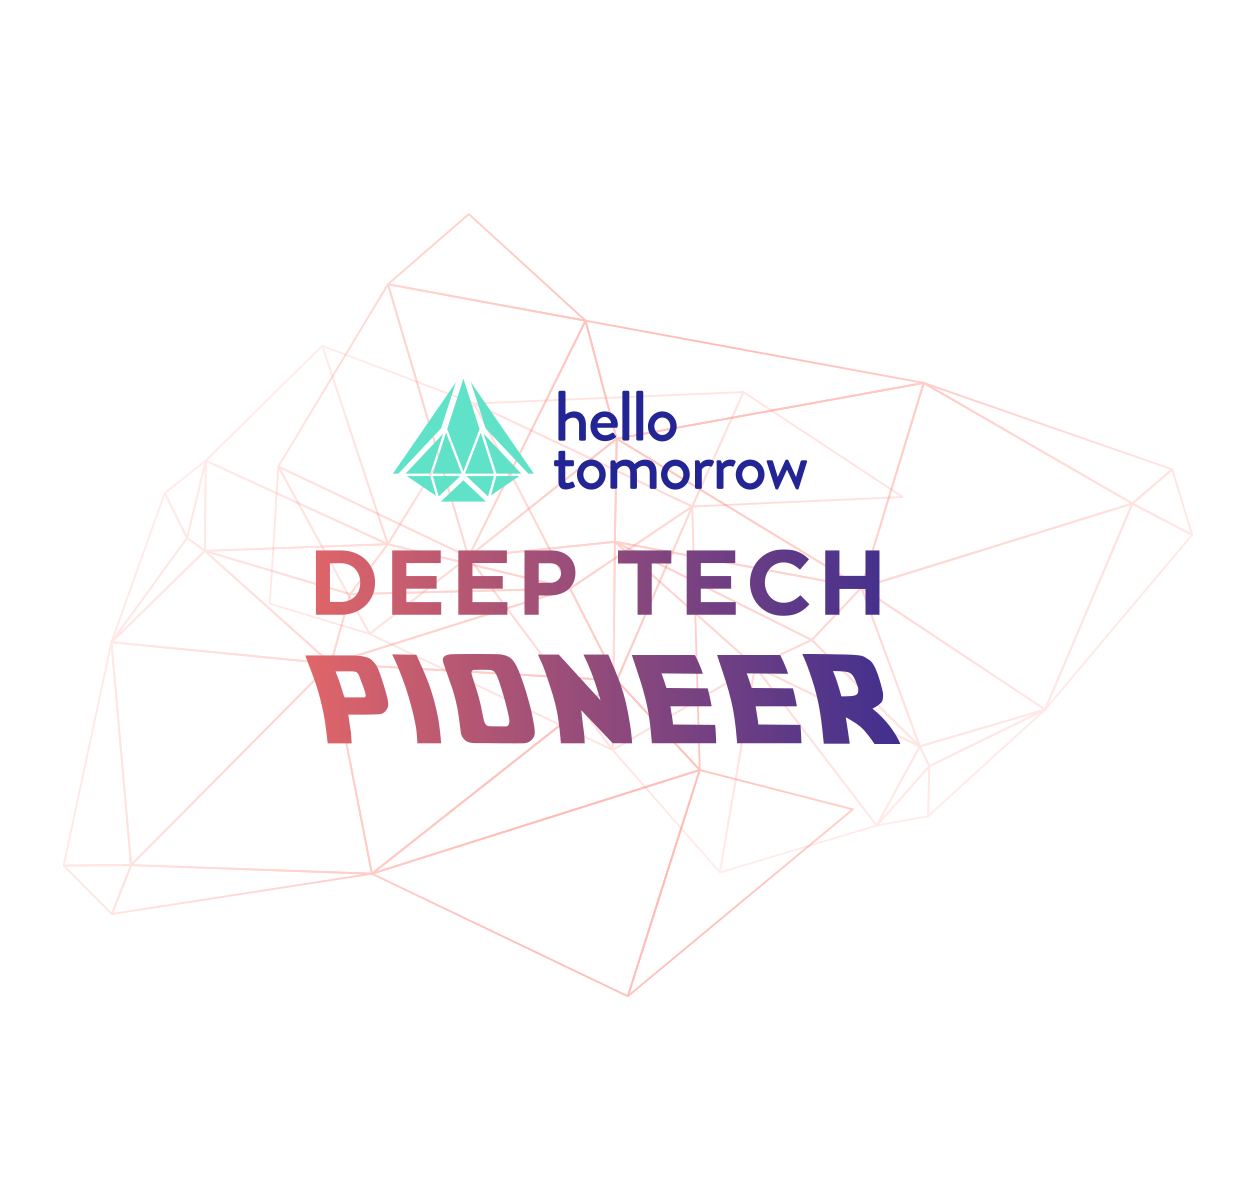 Deep Tech Pioneer Badge